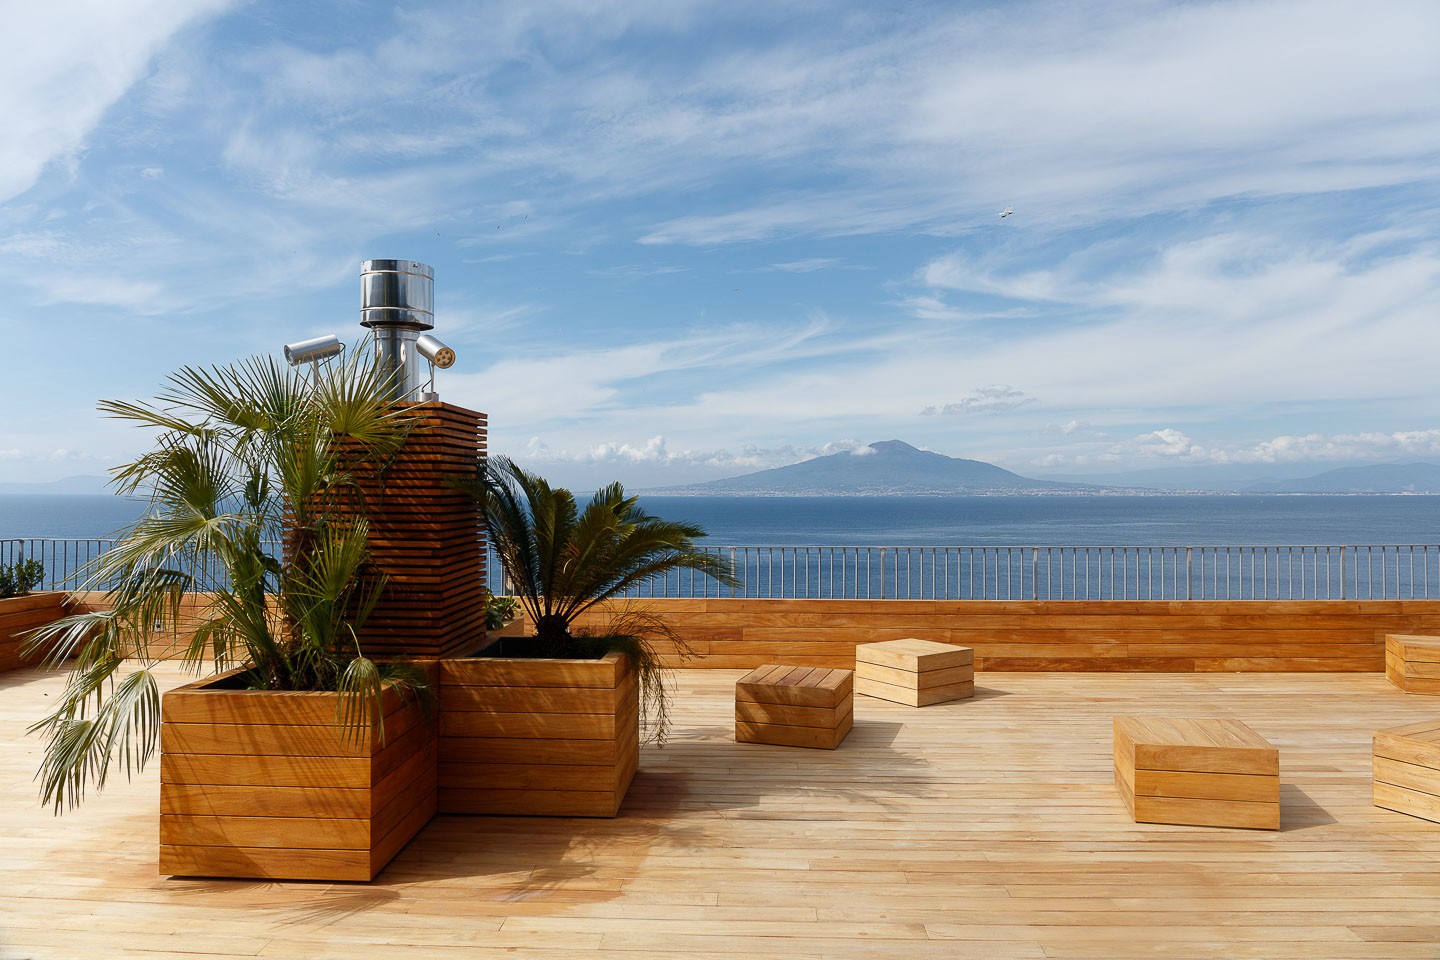 Villa Astor Sorrento Amalfi coast luxury home residence rental reception area events rooftop terrace mount Vesuvius sea stunning view 33